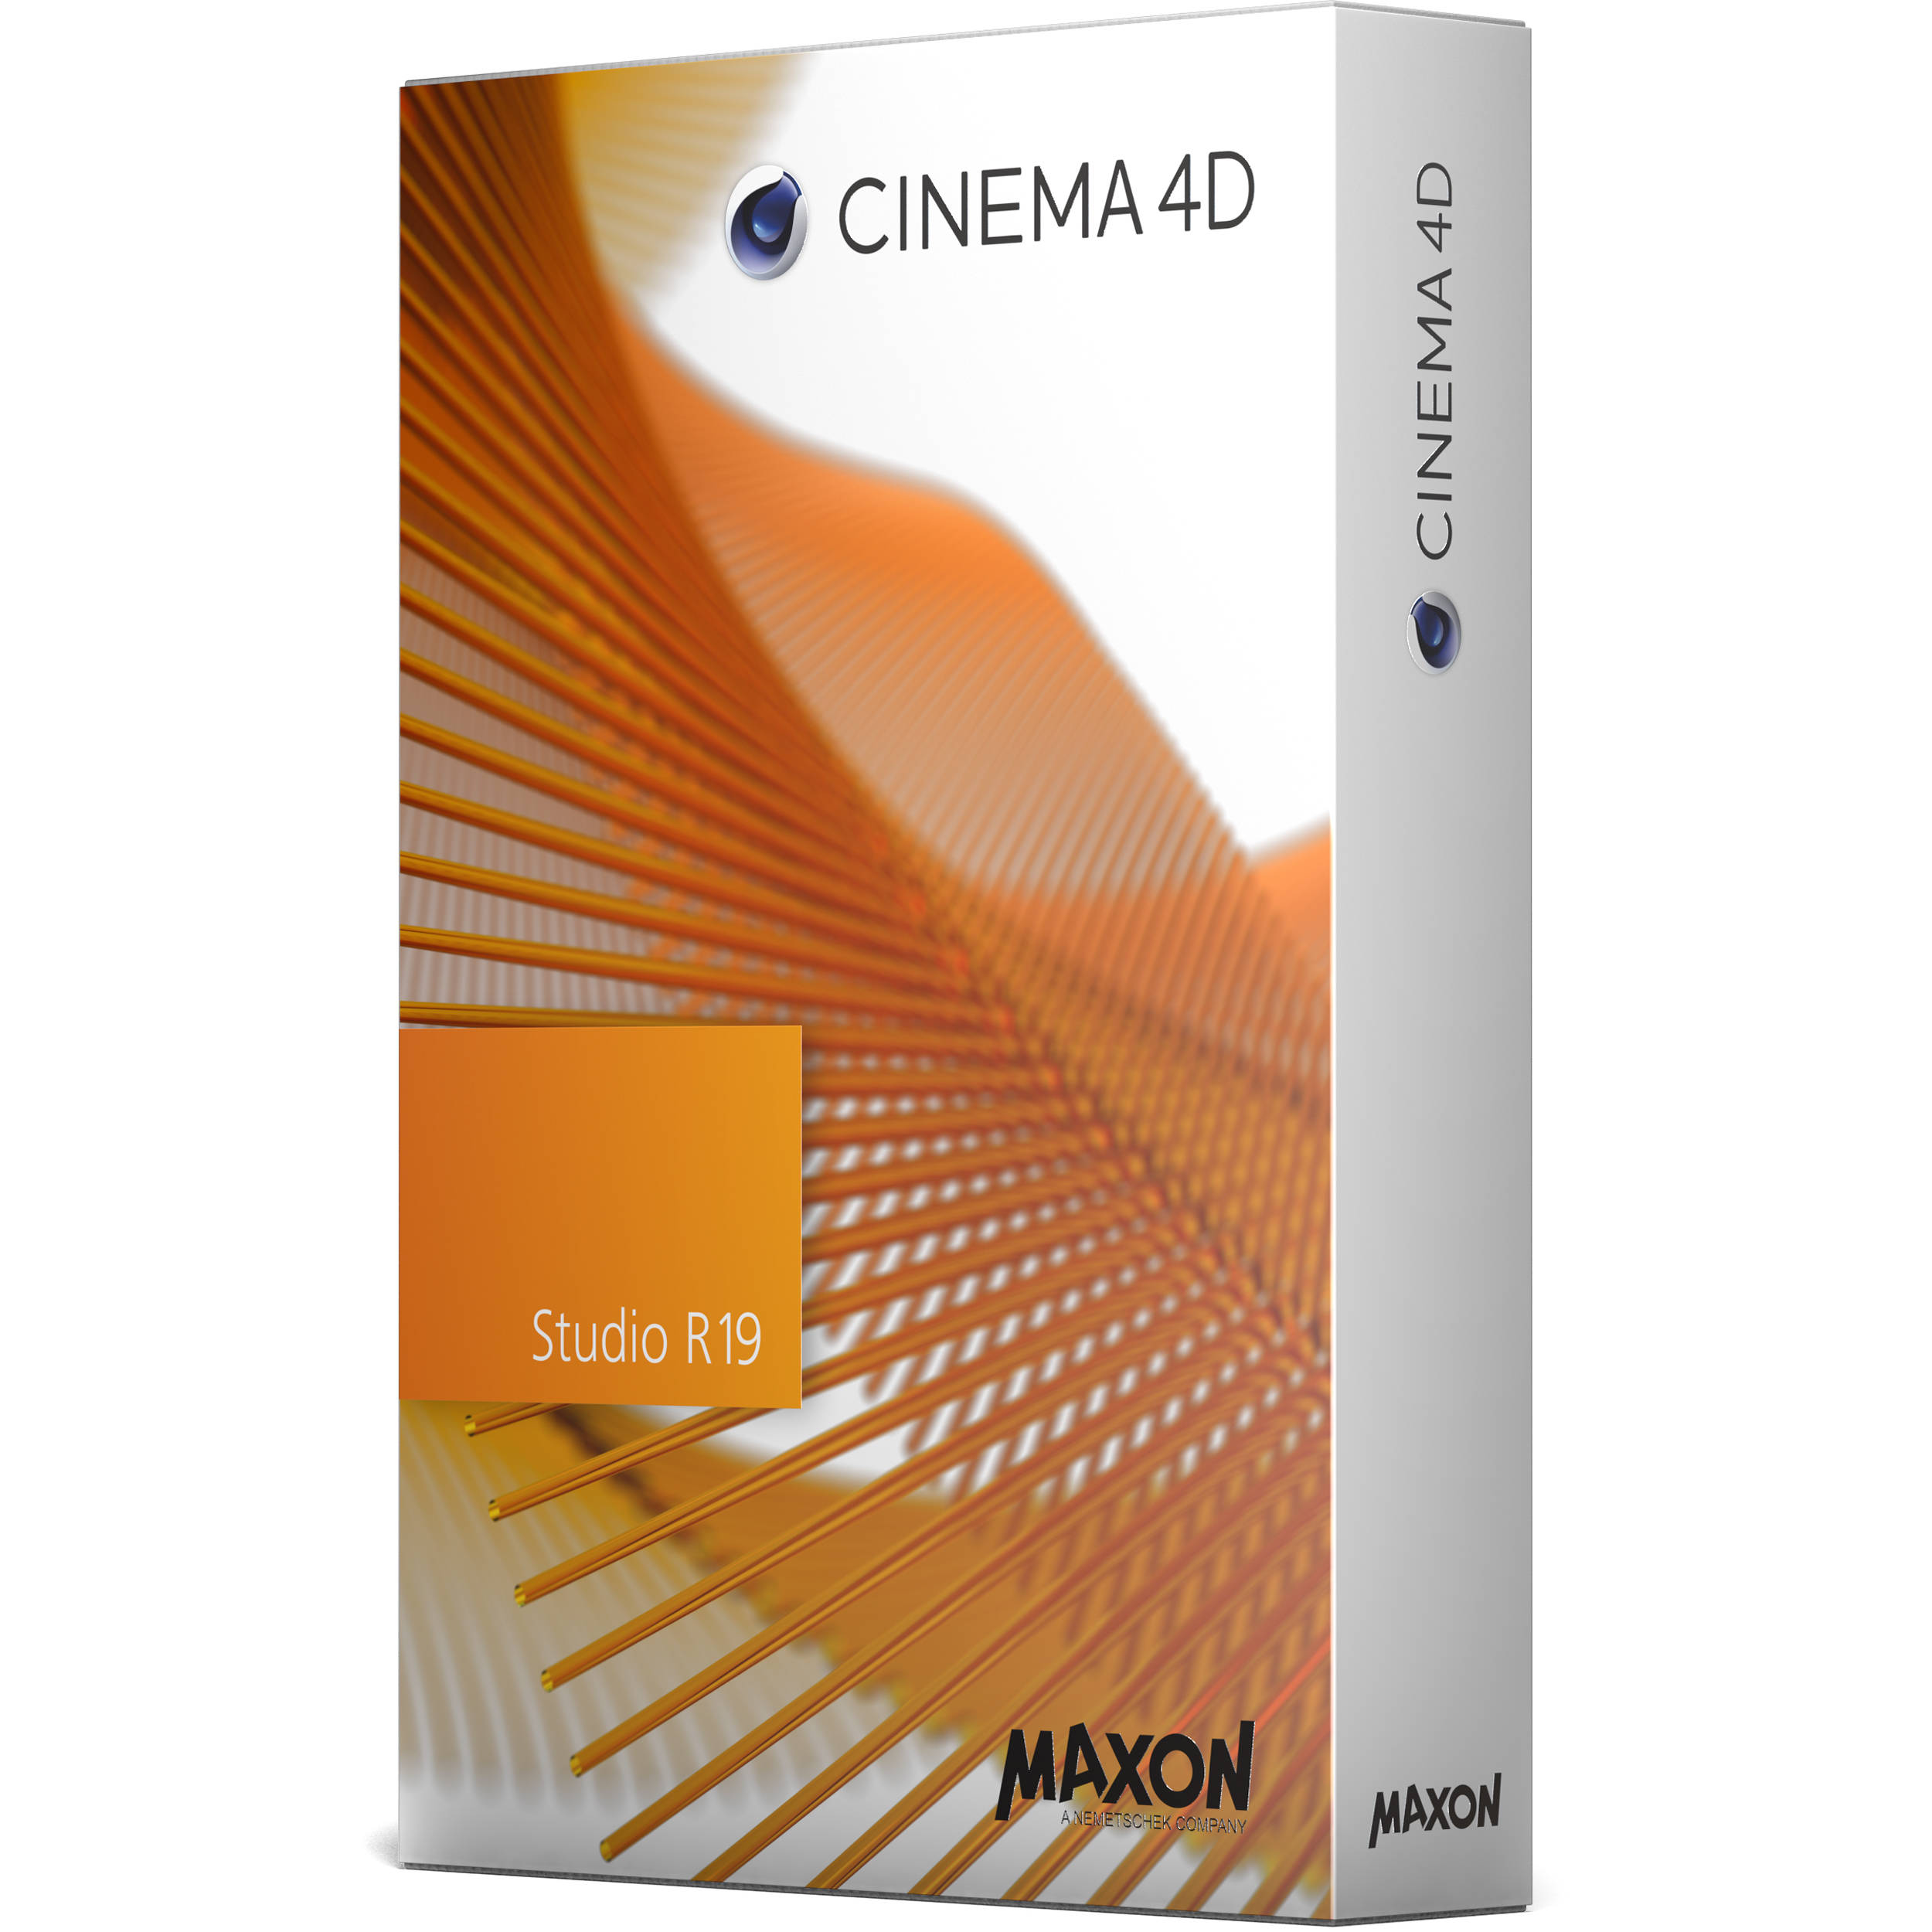 Cinema 4D R19 Free Download